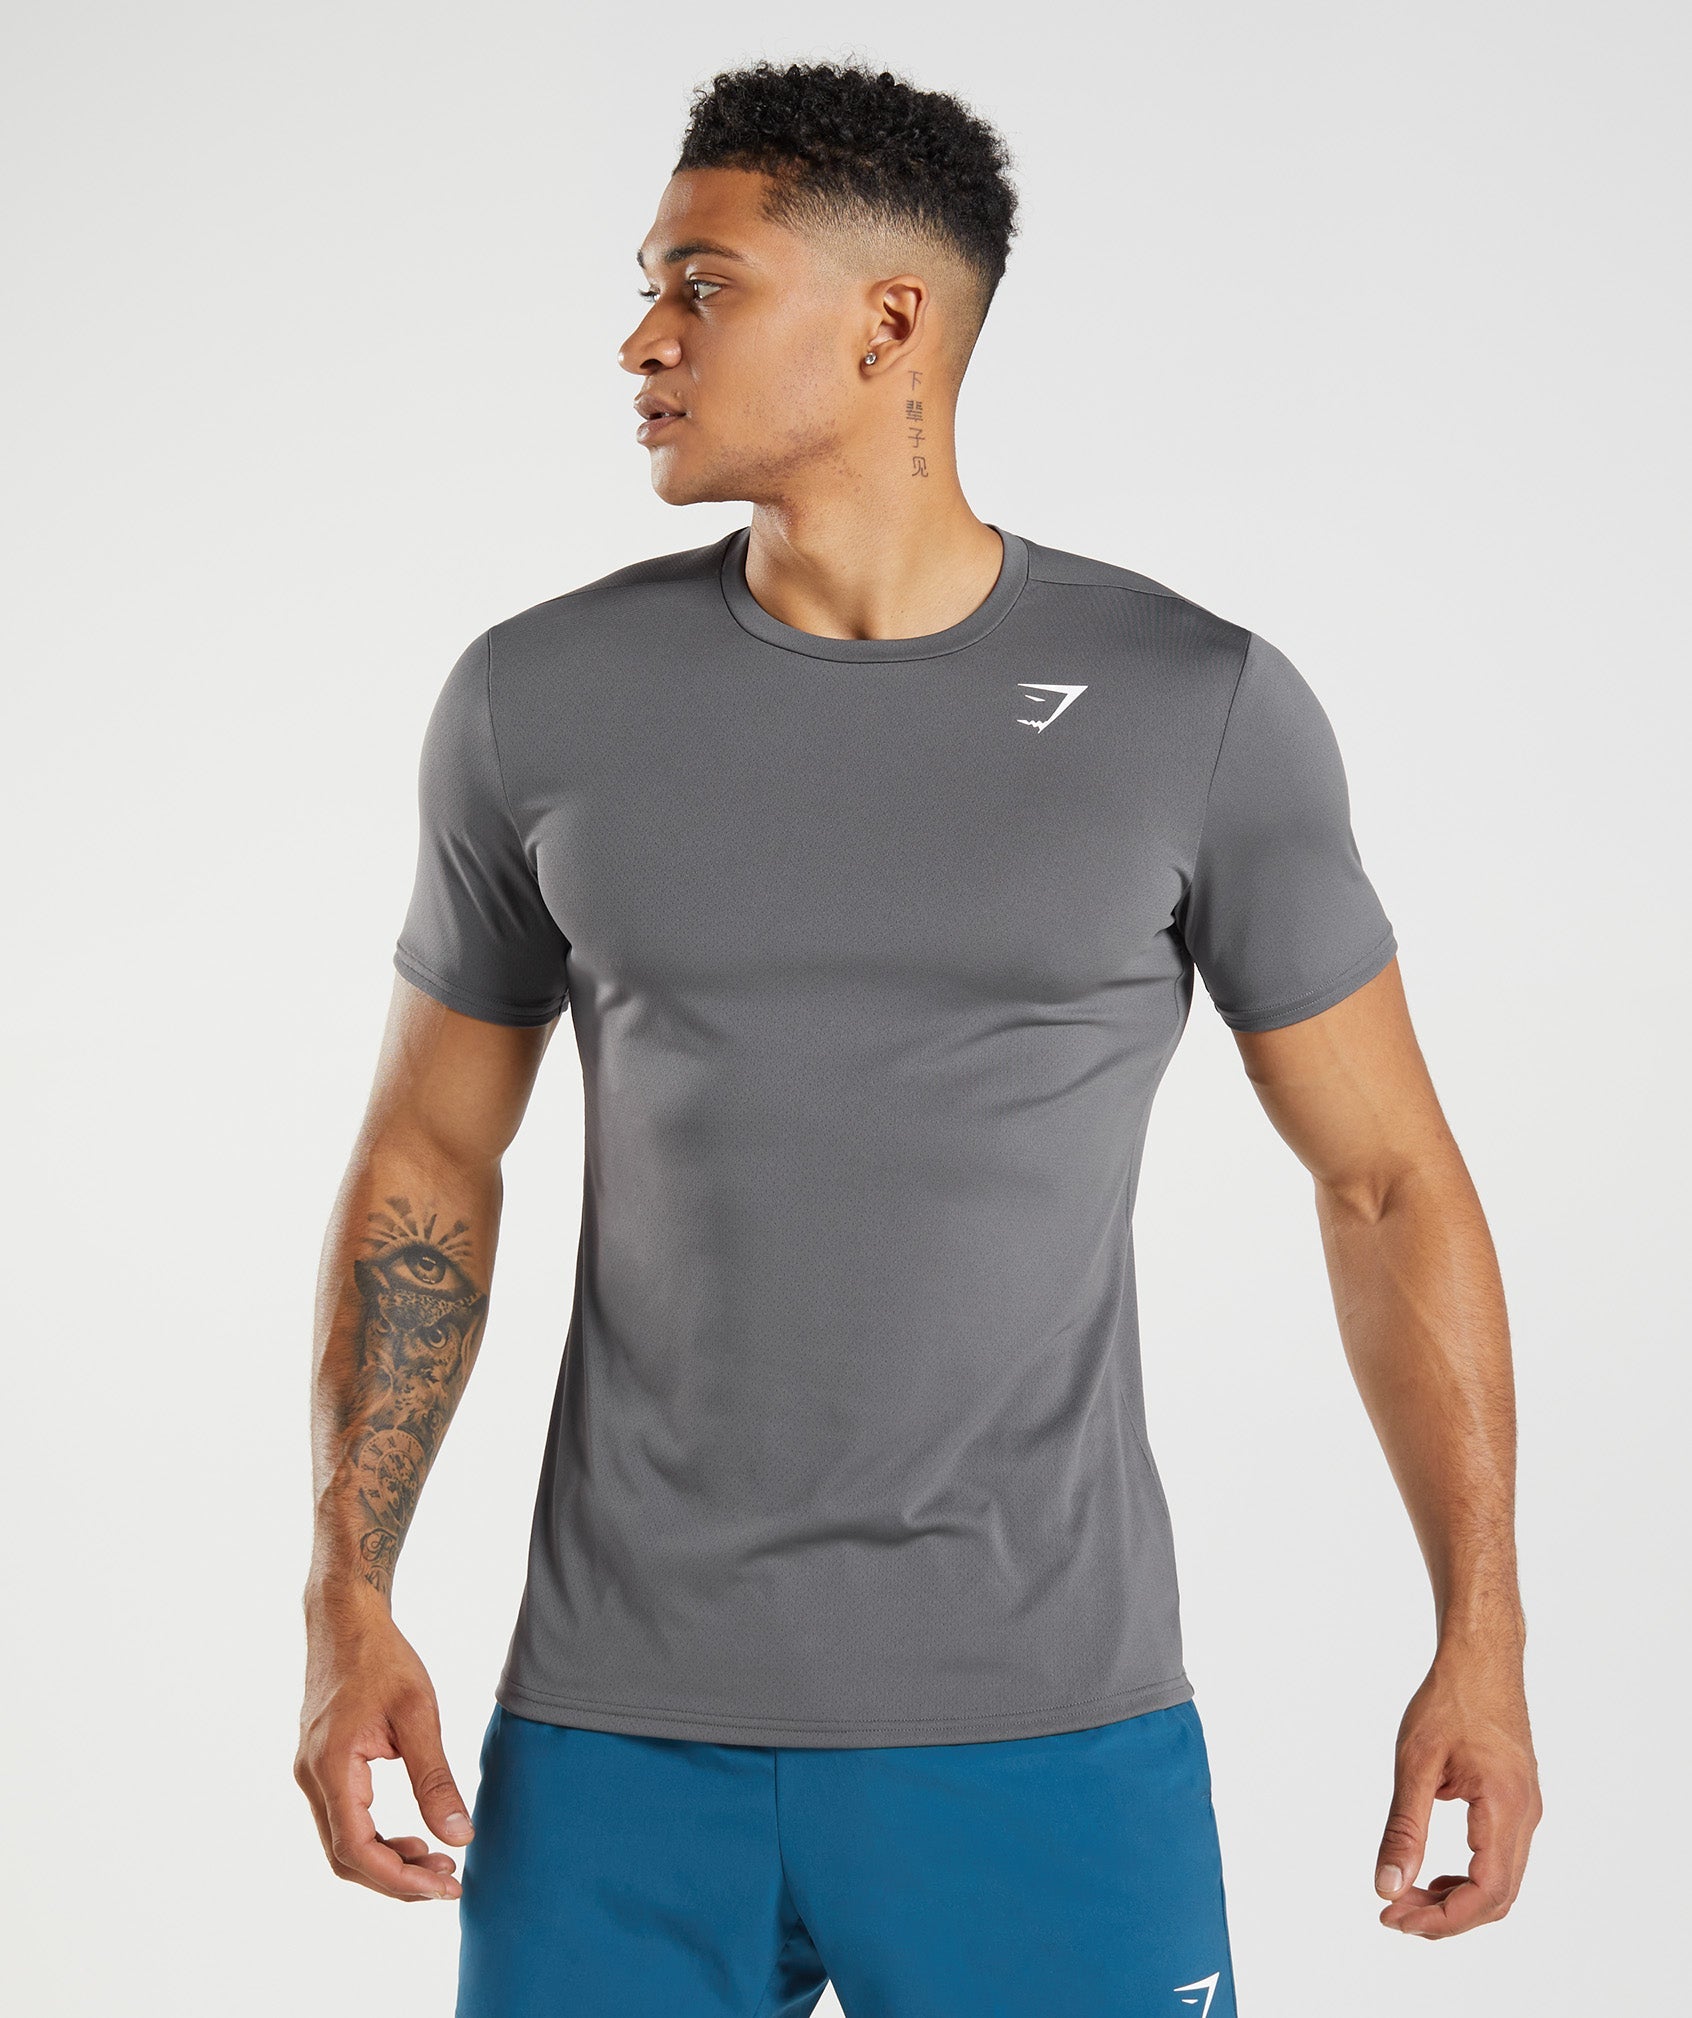 Gymshark Men's Muscle Tank Top Logo Shirt Gray Size: S